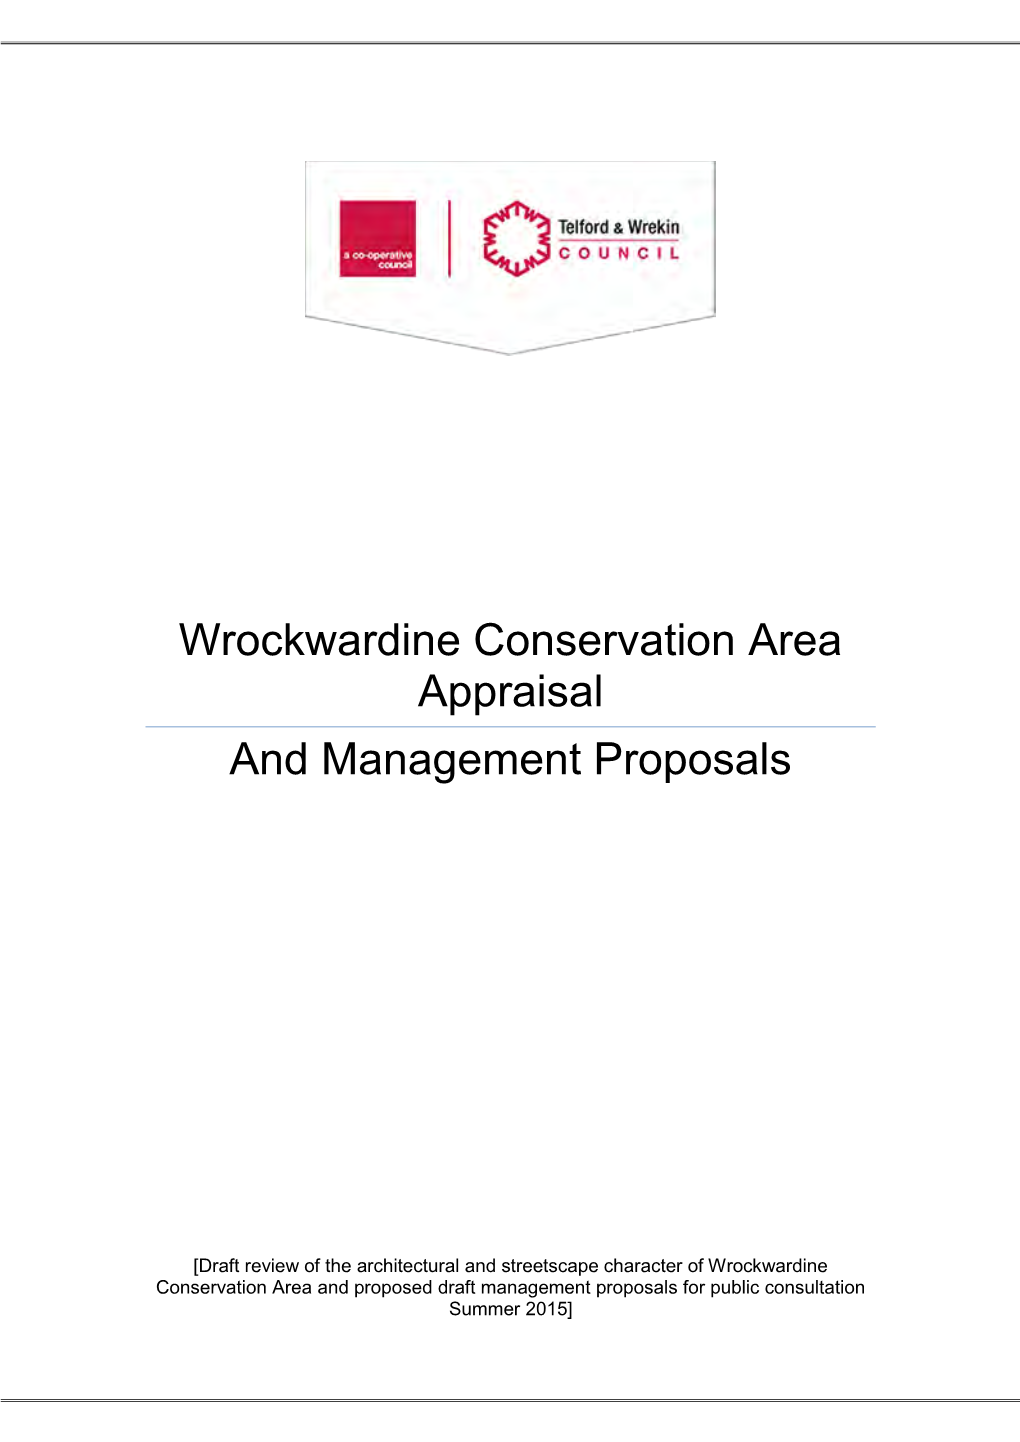 Wrockwardine Conservation Area Appraisal and Management Proposals